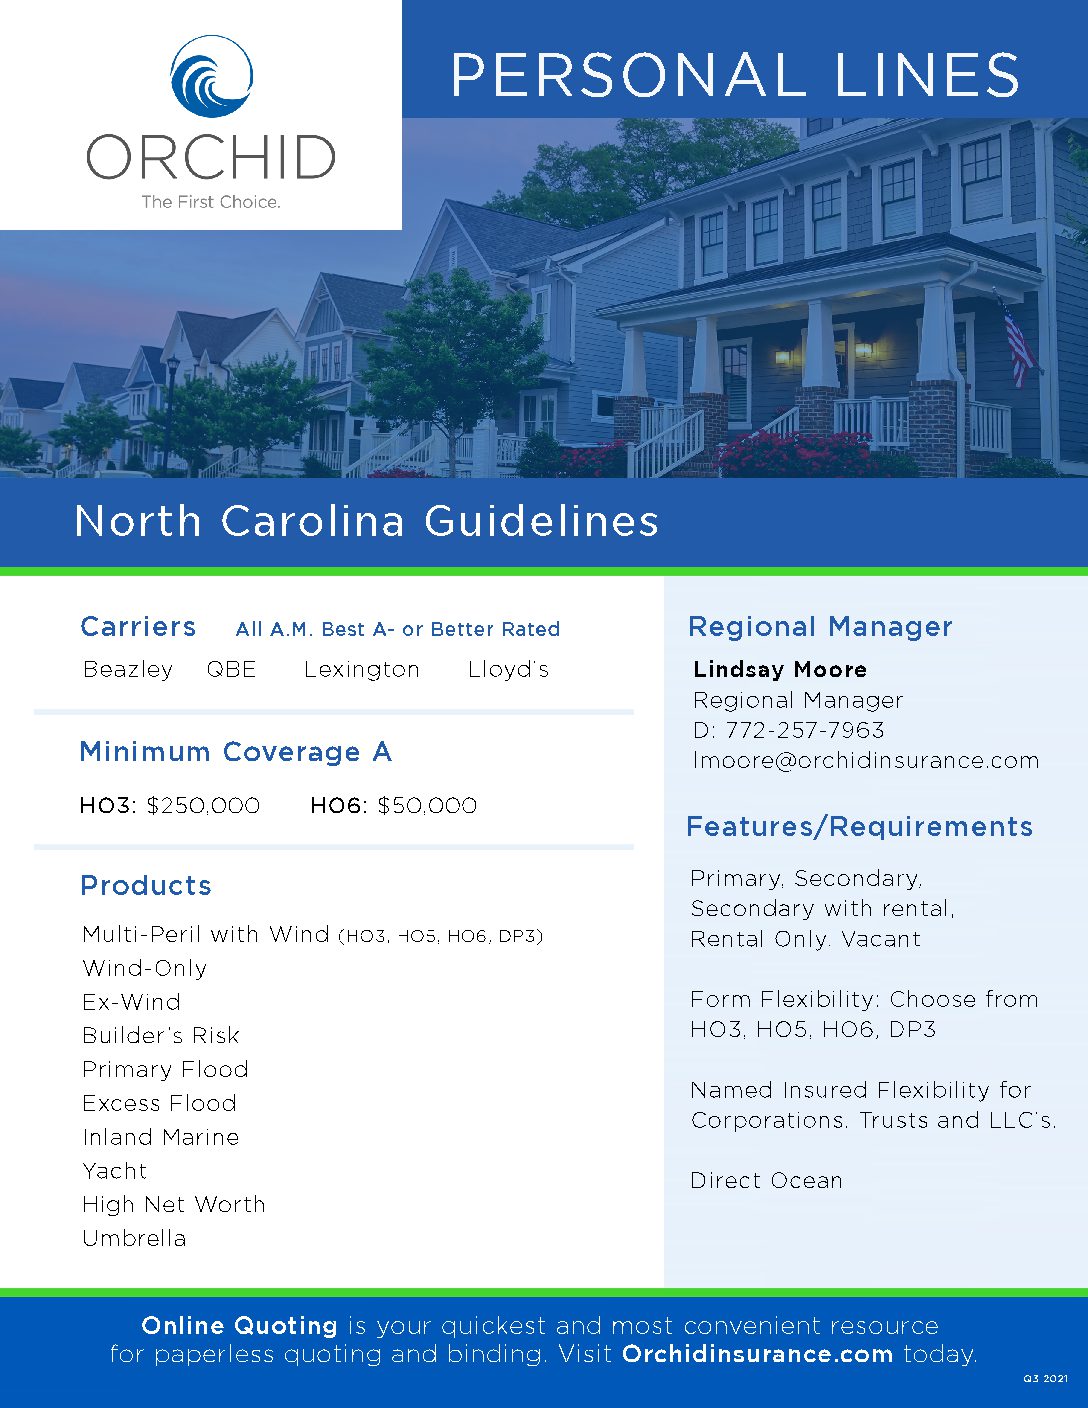 North Carolina Personal Lines Insurance